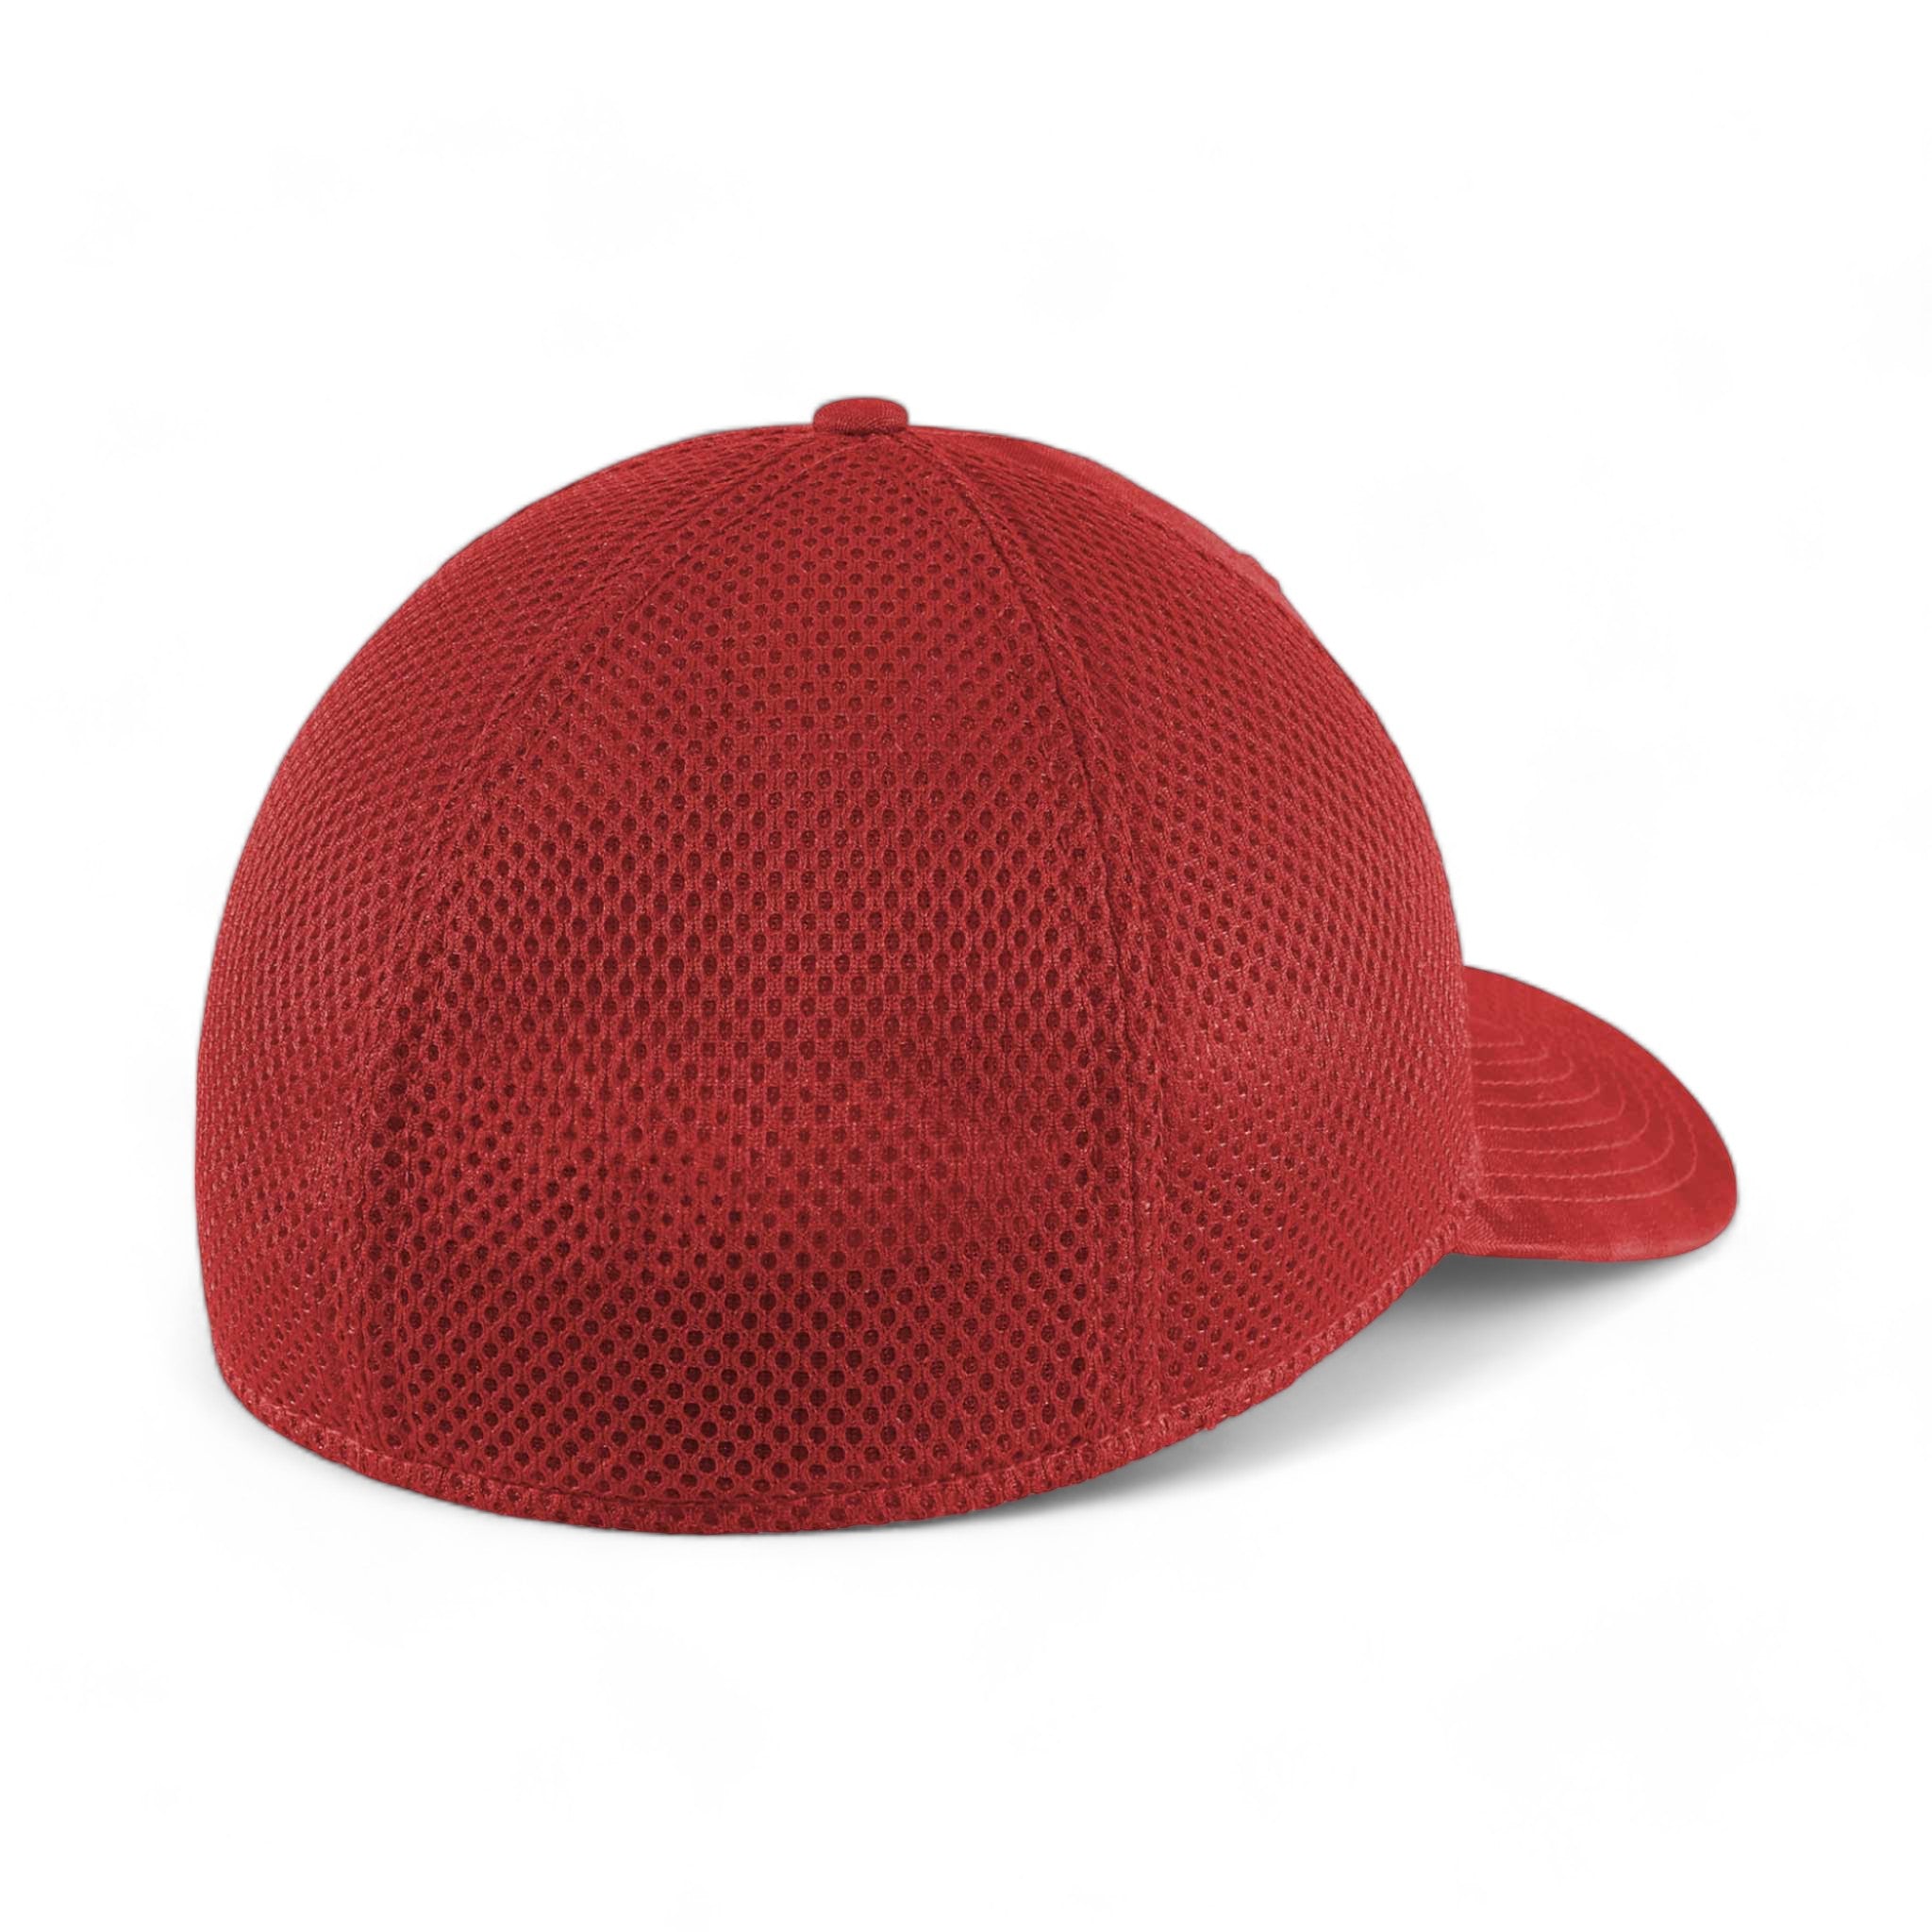 Back view of New Era NE1091 custom hat in red camo